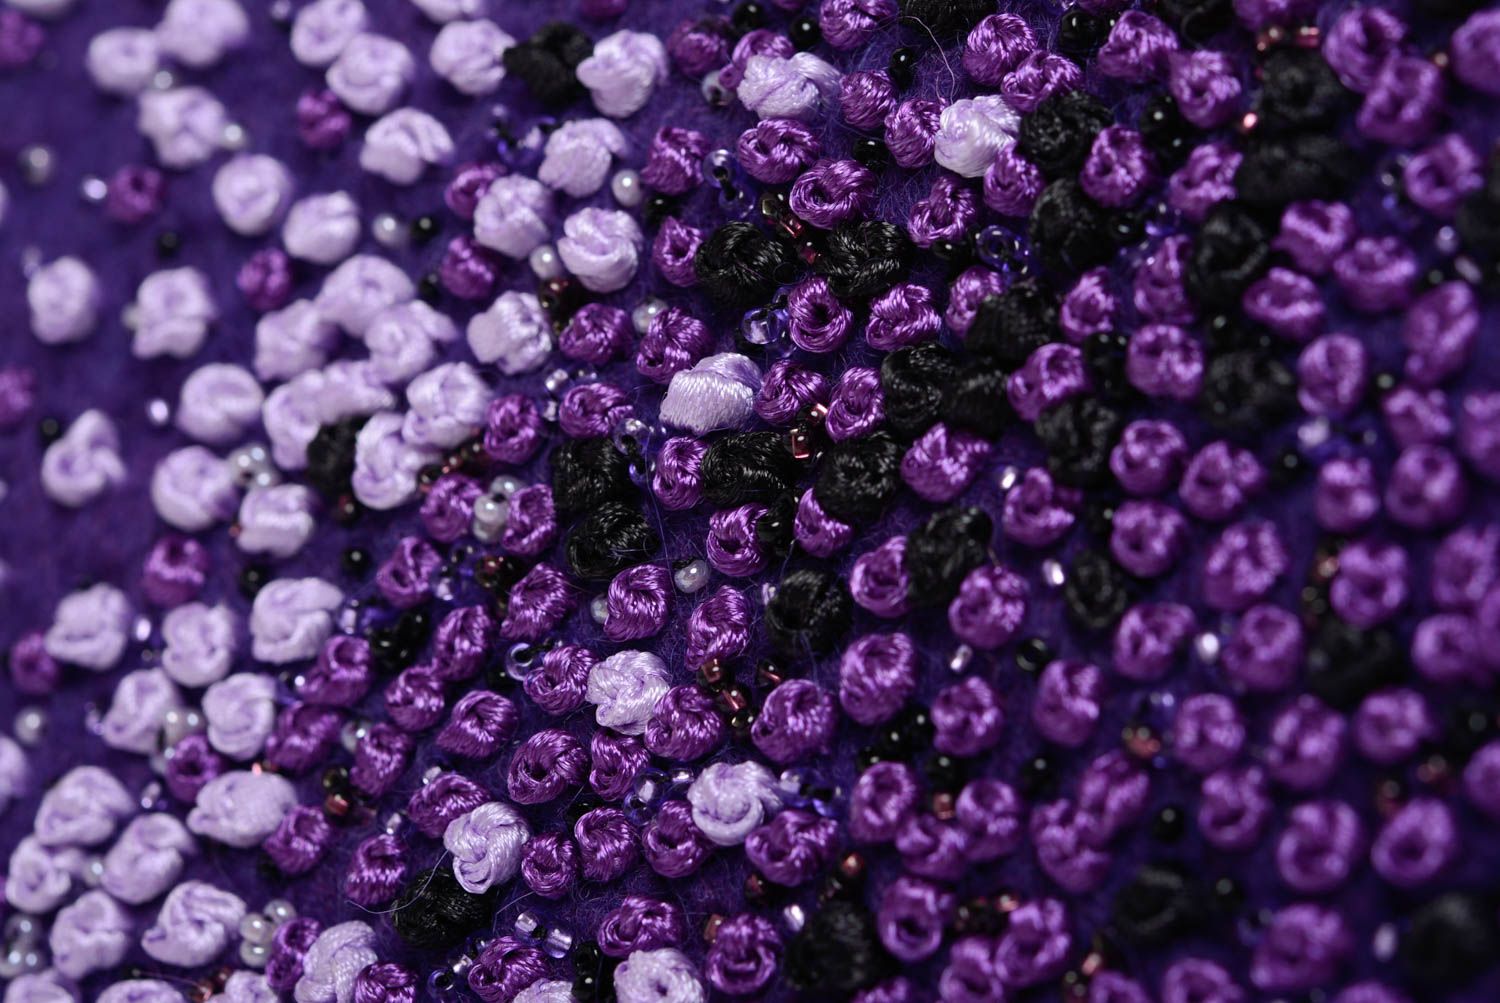 Handmade beautiful purple purse made using wool felting technique on chain photo 5